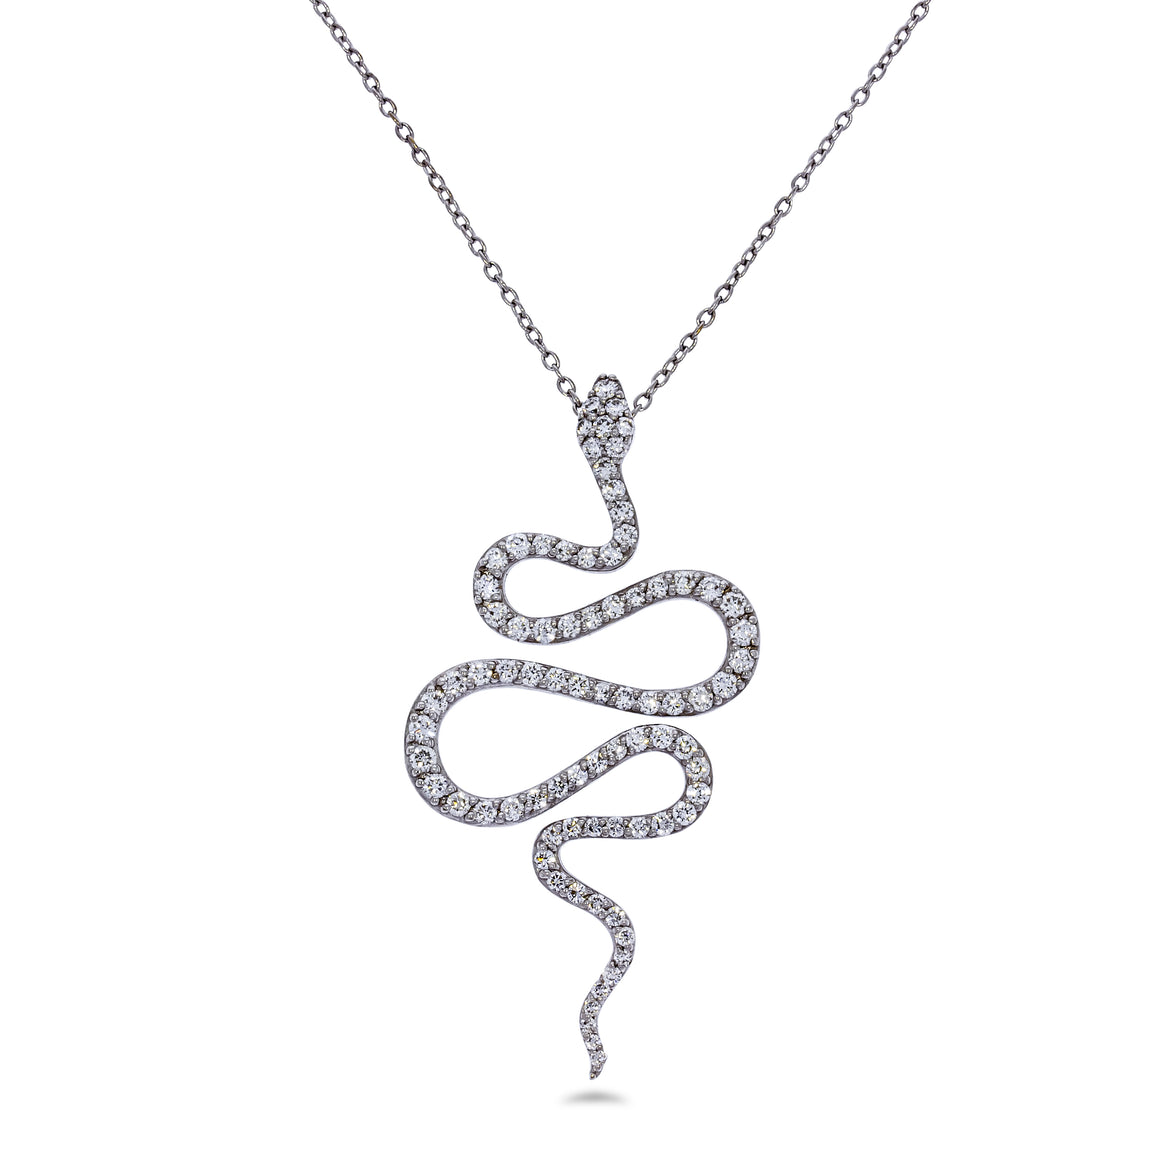 14k white gold, snake diamonds pendant. Charm Pendant pave with 81 round 1.13ct diamonds. symbol of wisdom pendent.